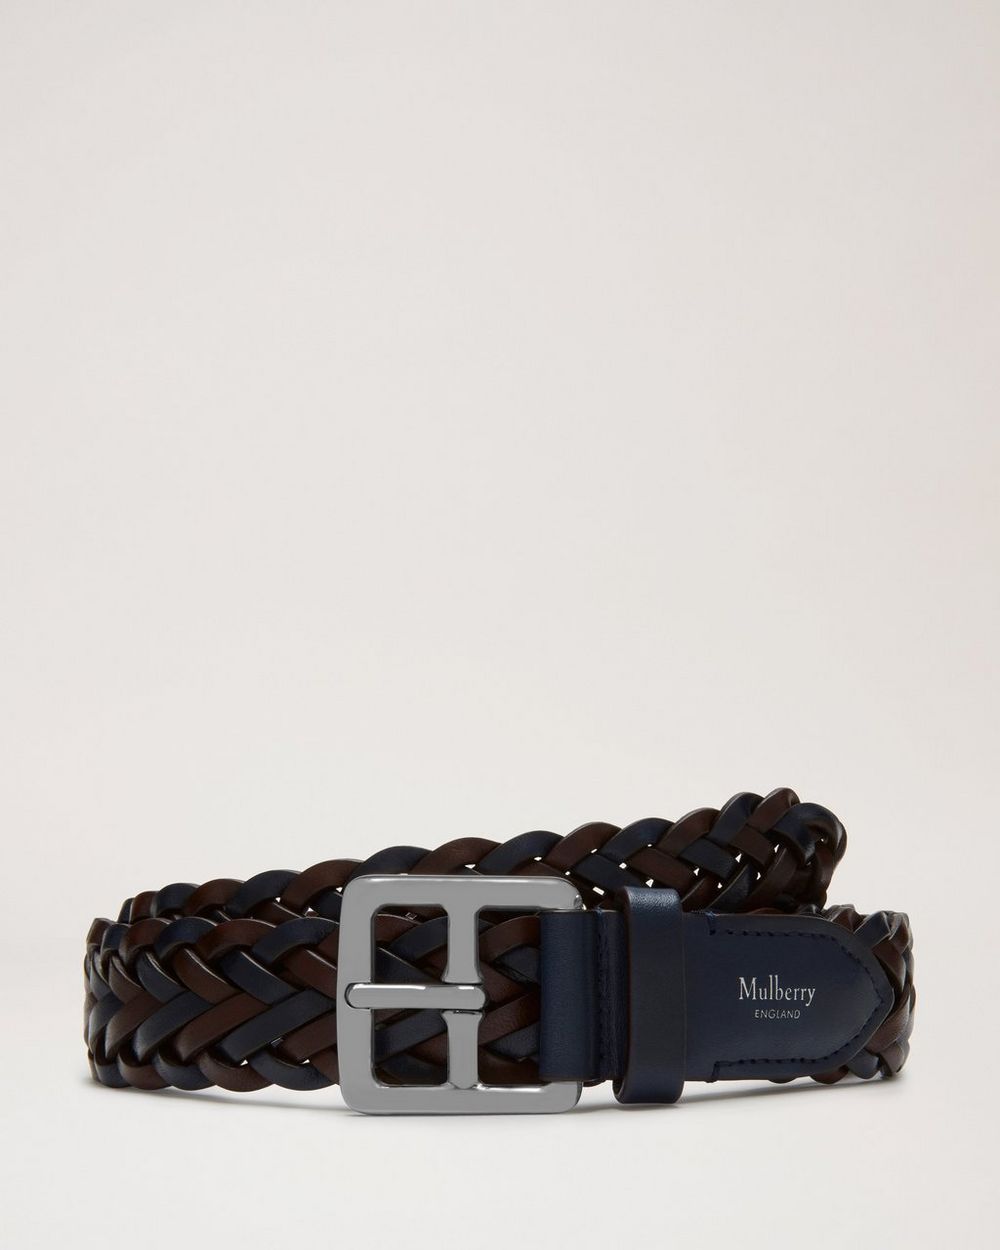 Genuine Boho Leather Belt - Buy Boho Belts Online